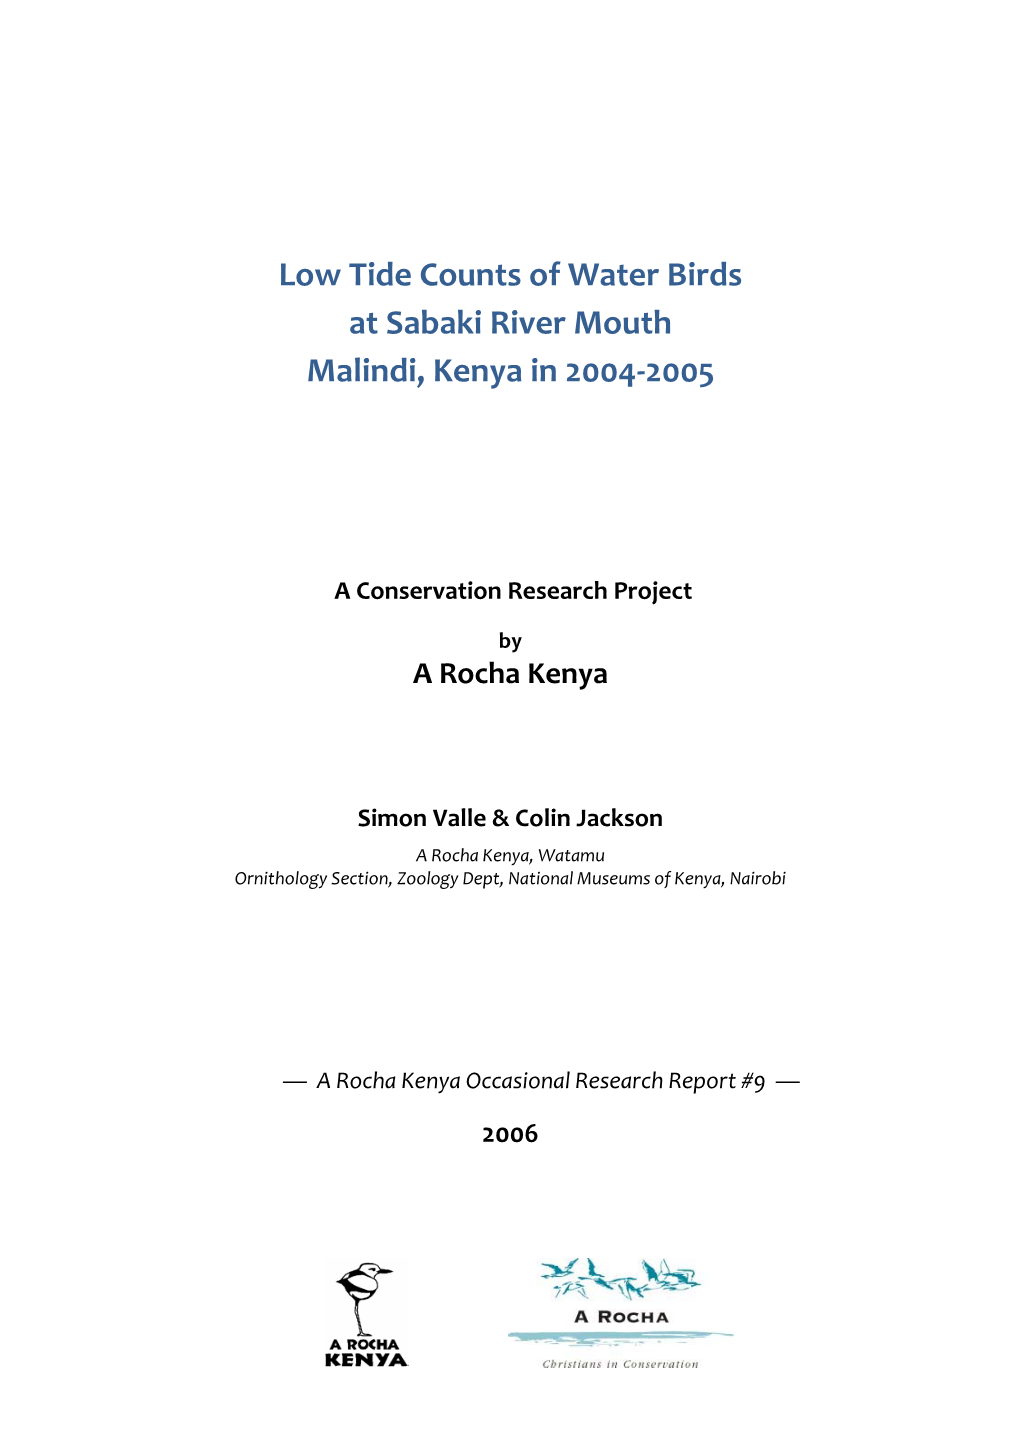 Low Tide Counts of Water Birds at Sabaki River Mouth Malindi, Kenya in 2004-2005